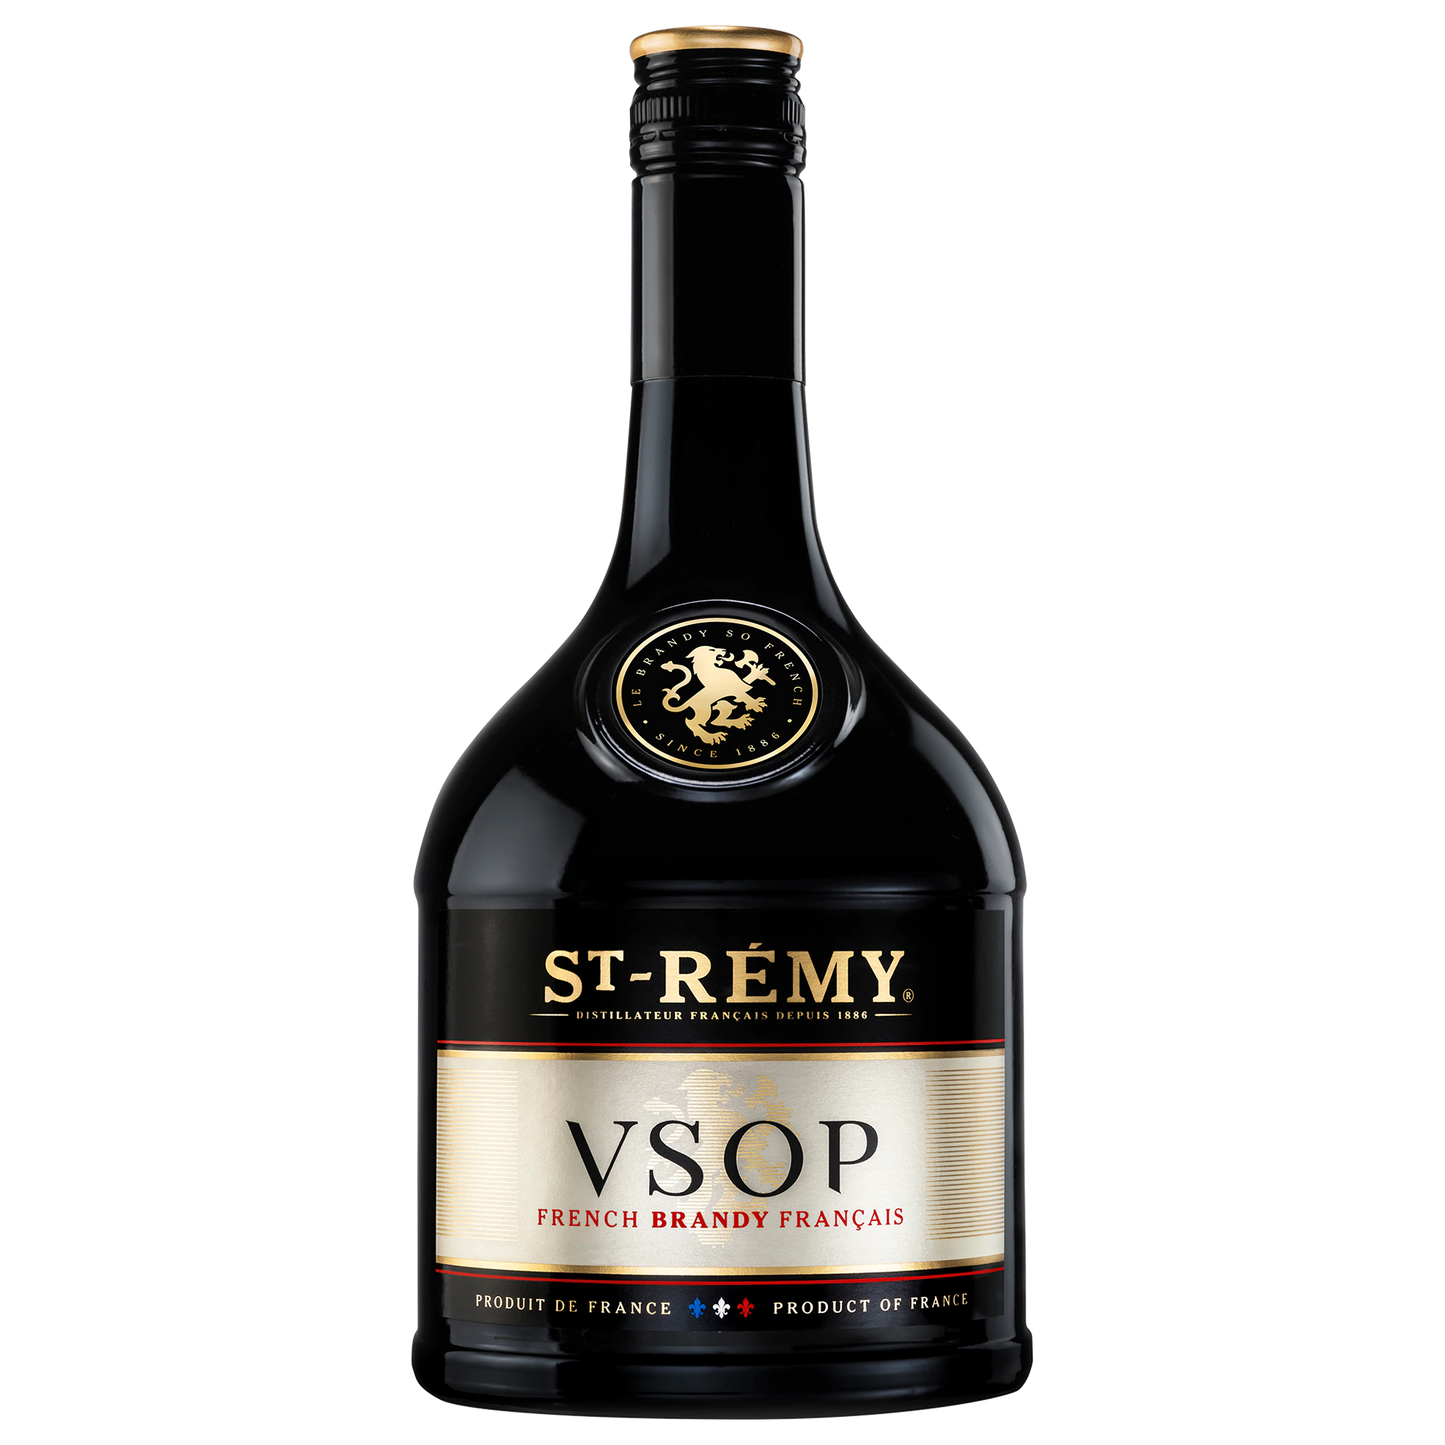 St Remy VSOP Brandy 700ml